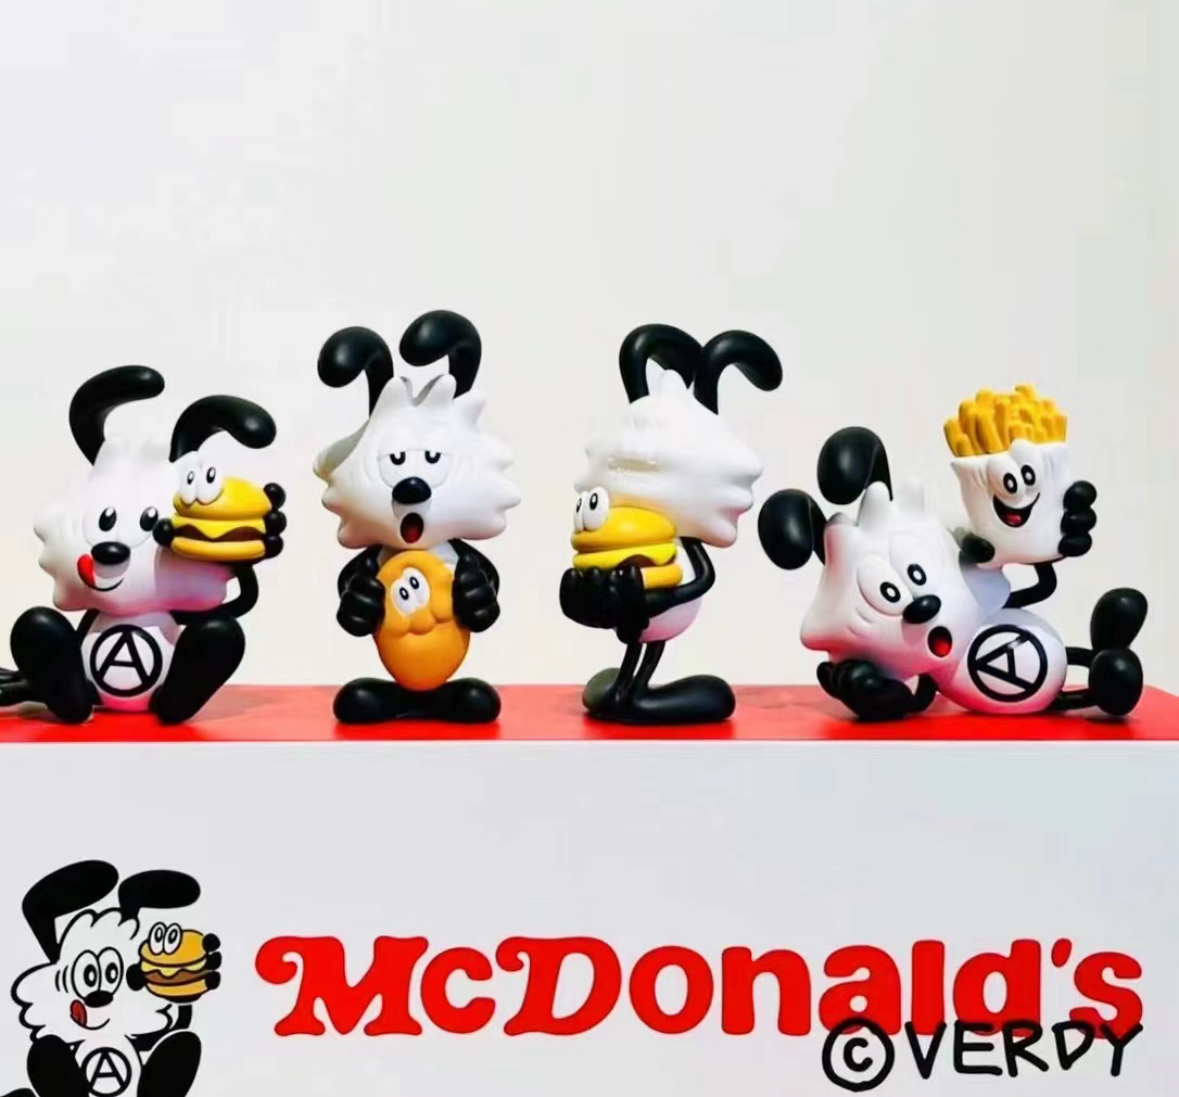 VERDY x McDonald's 香港限定公仔